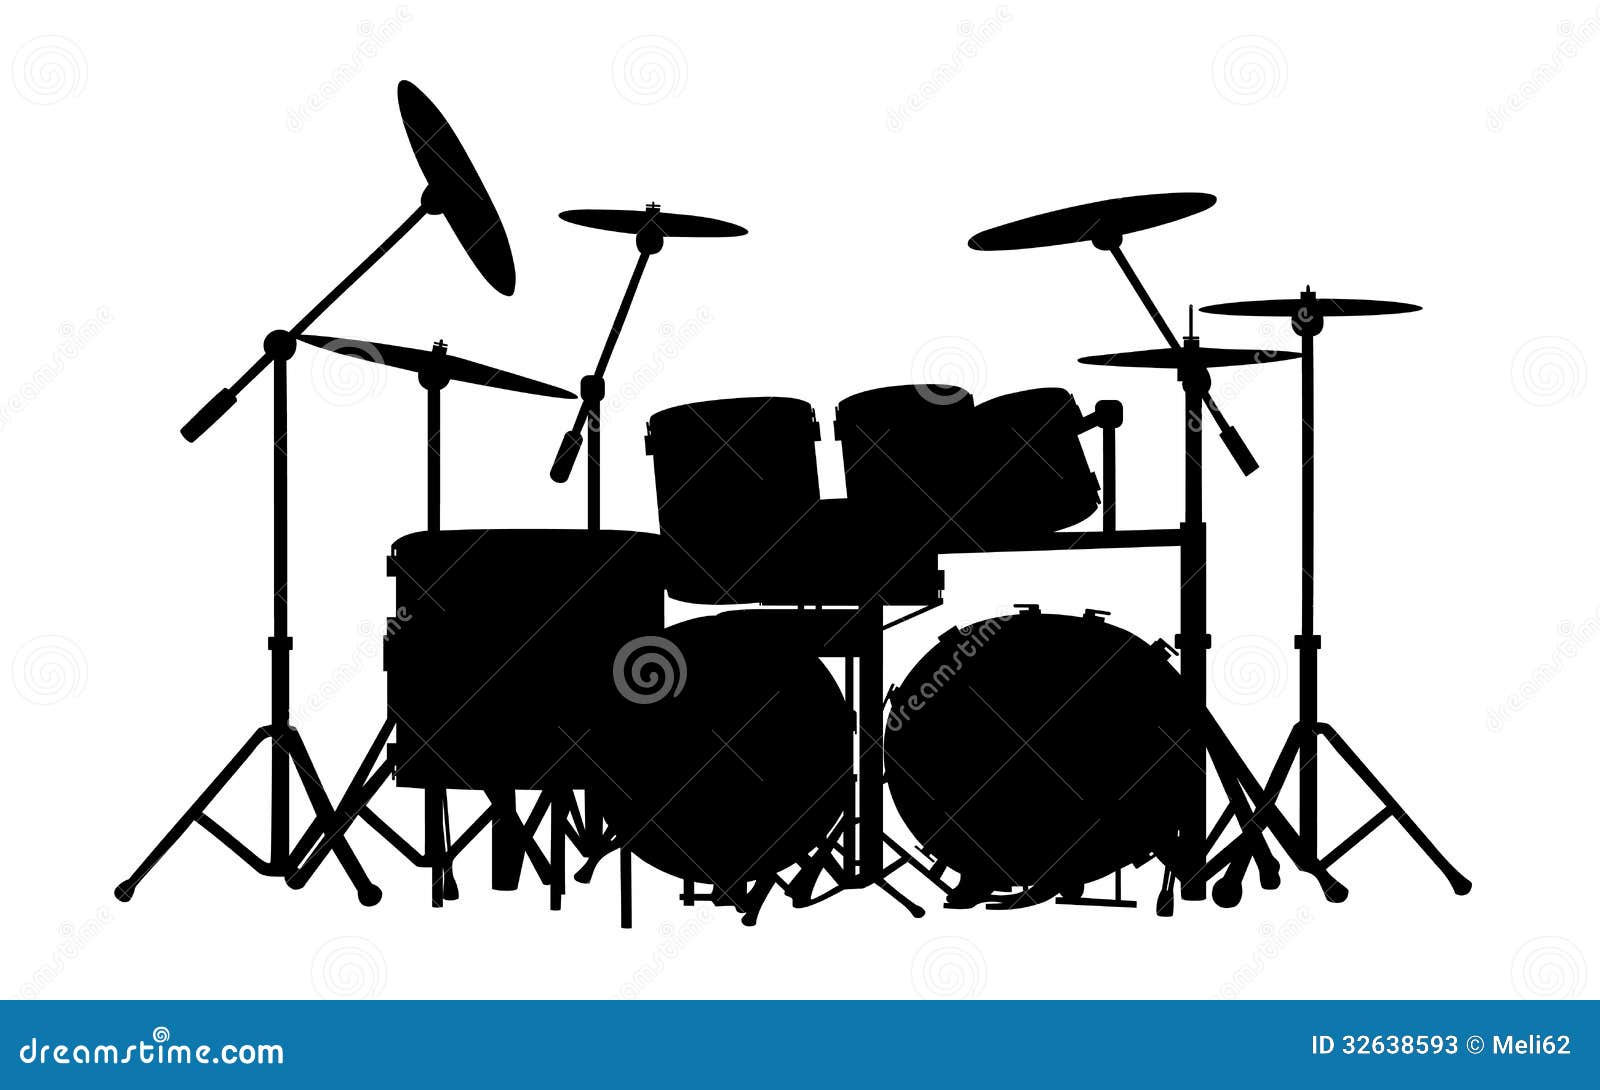 Drums Stock Photos  Image: 32638593